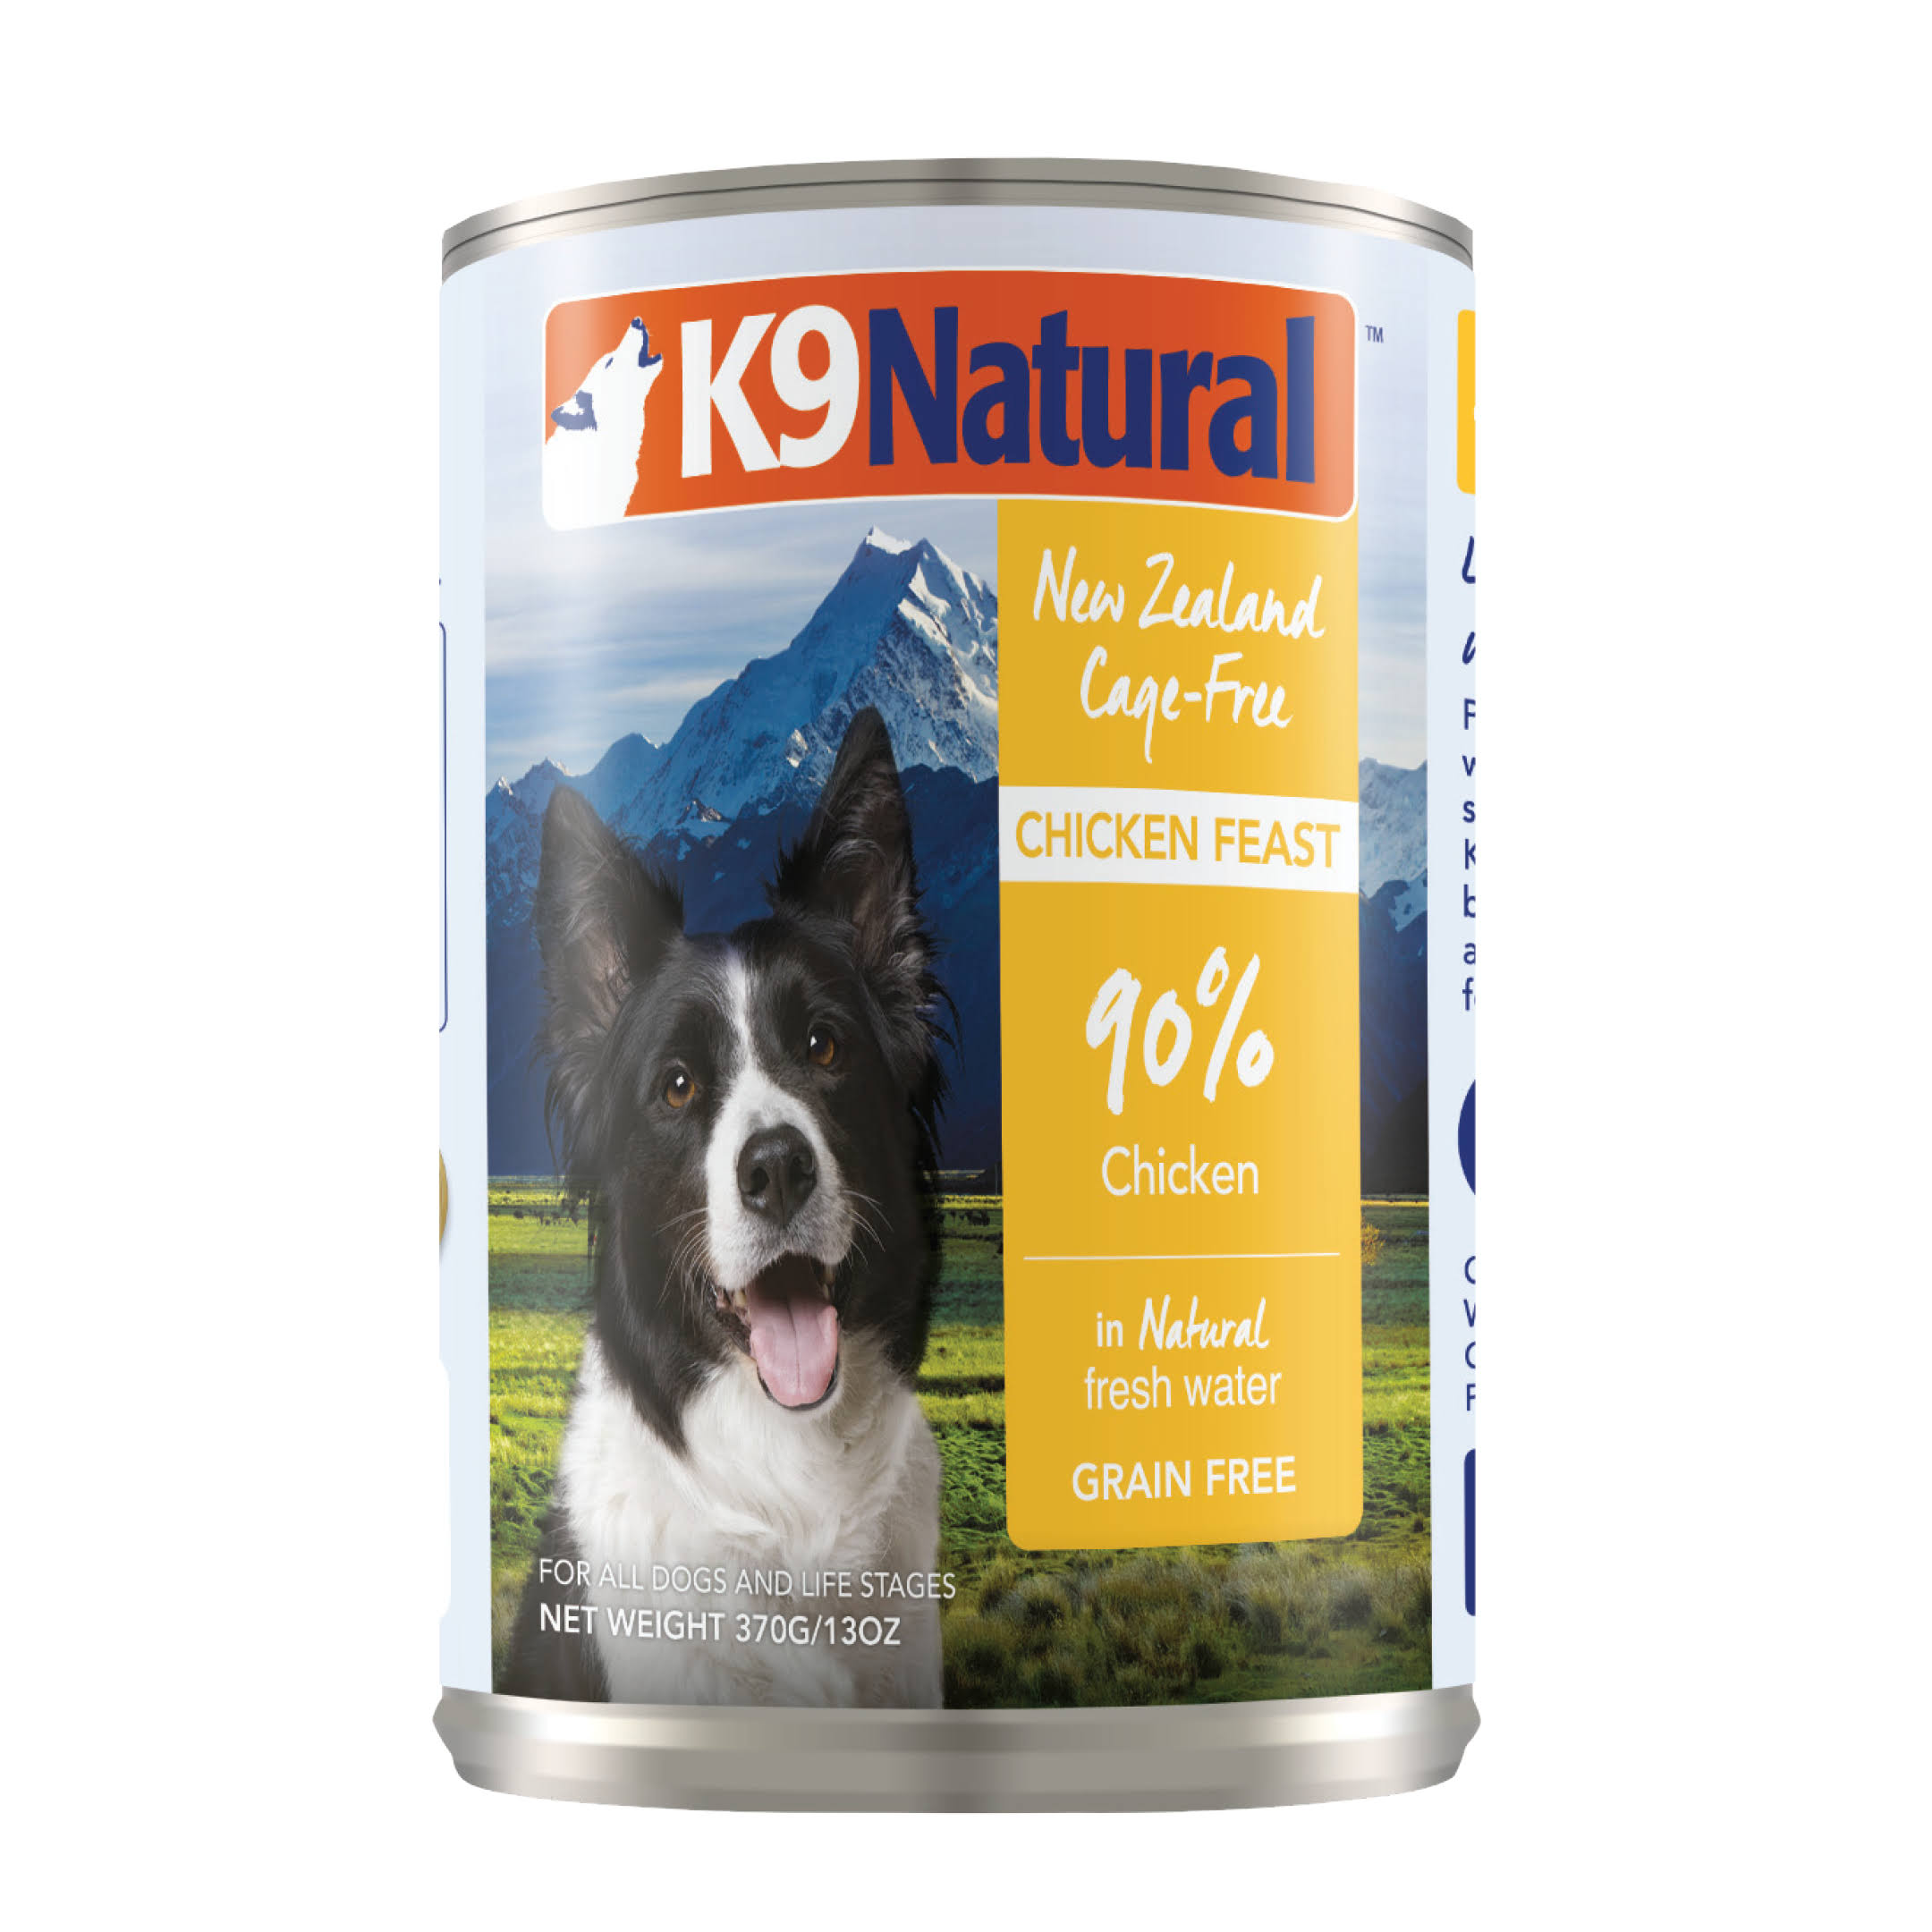 K9 Natural Chicken Feast Dog Food